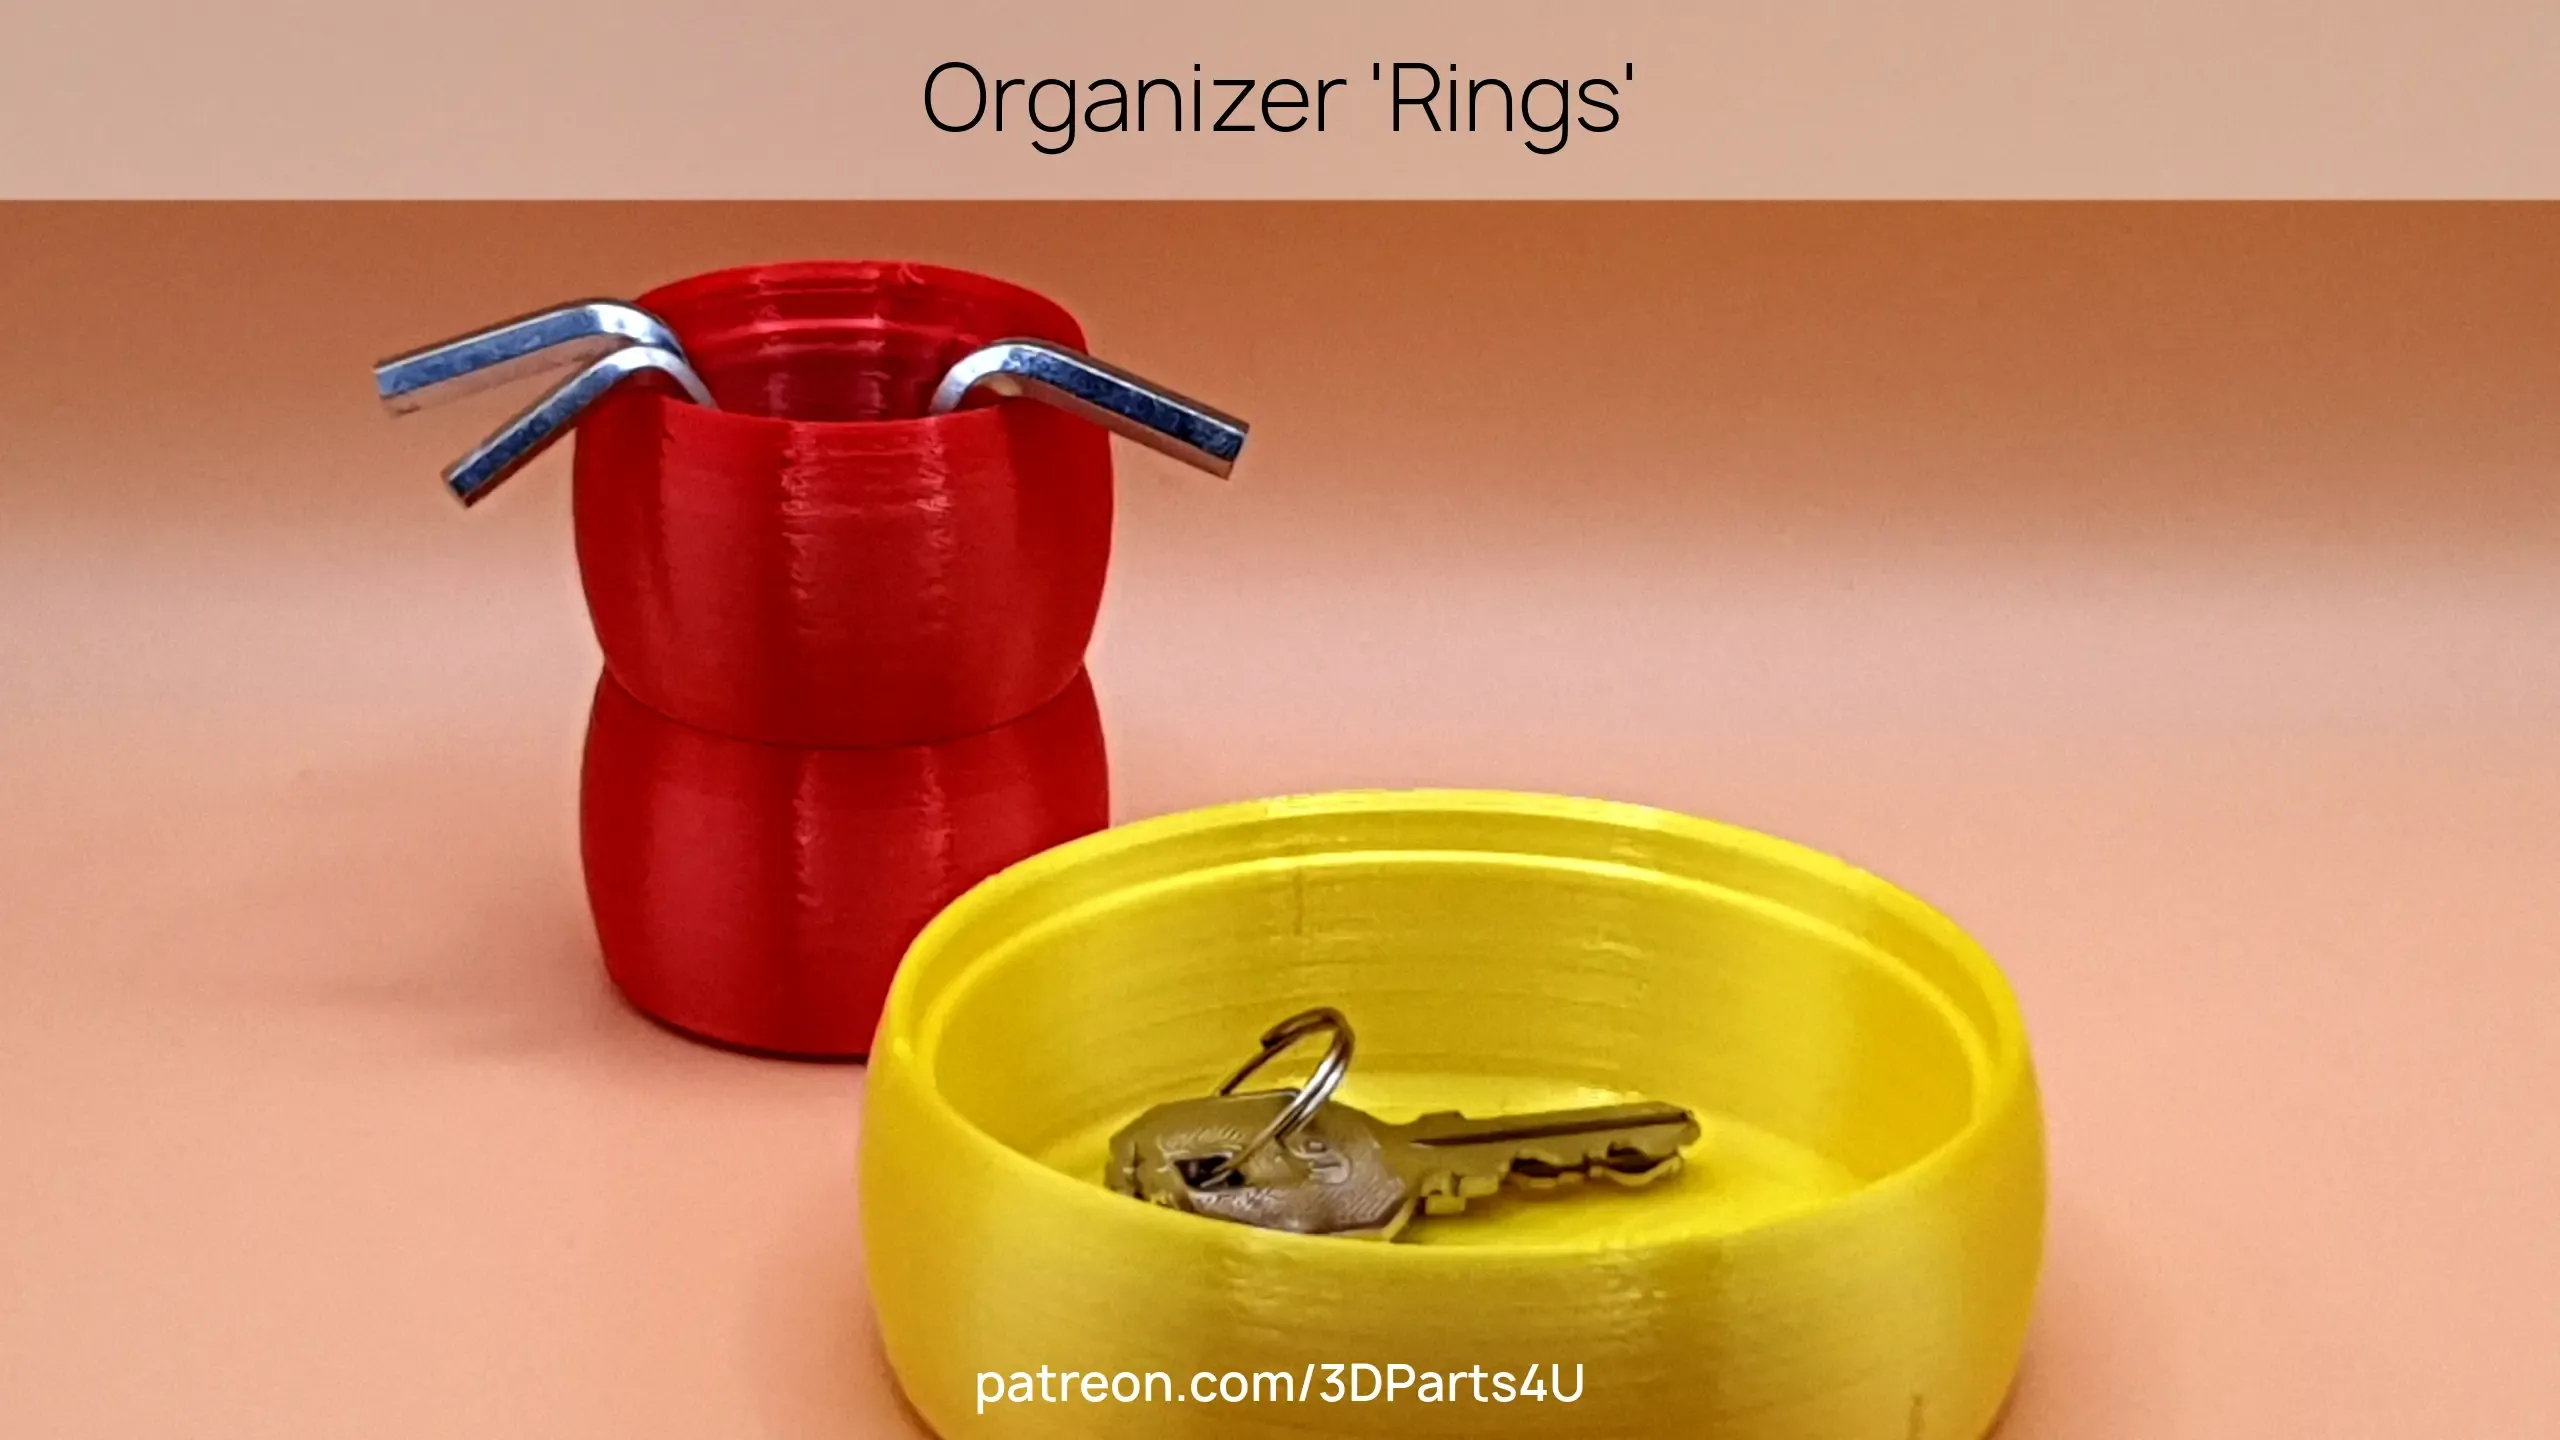 2023-3_Organizer 'Rings'